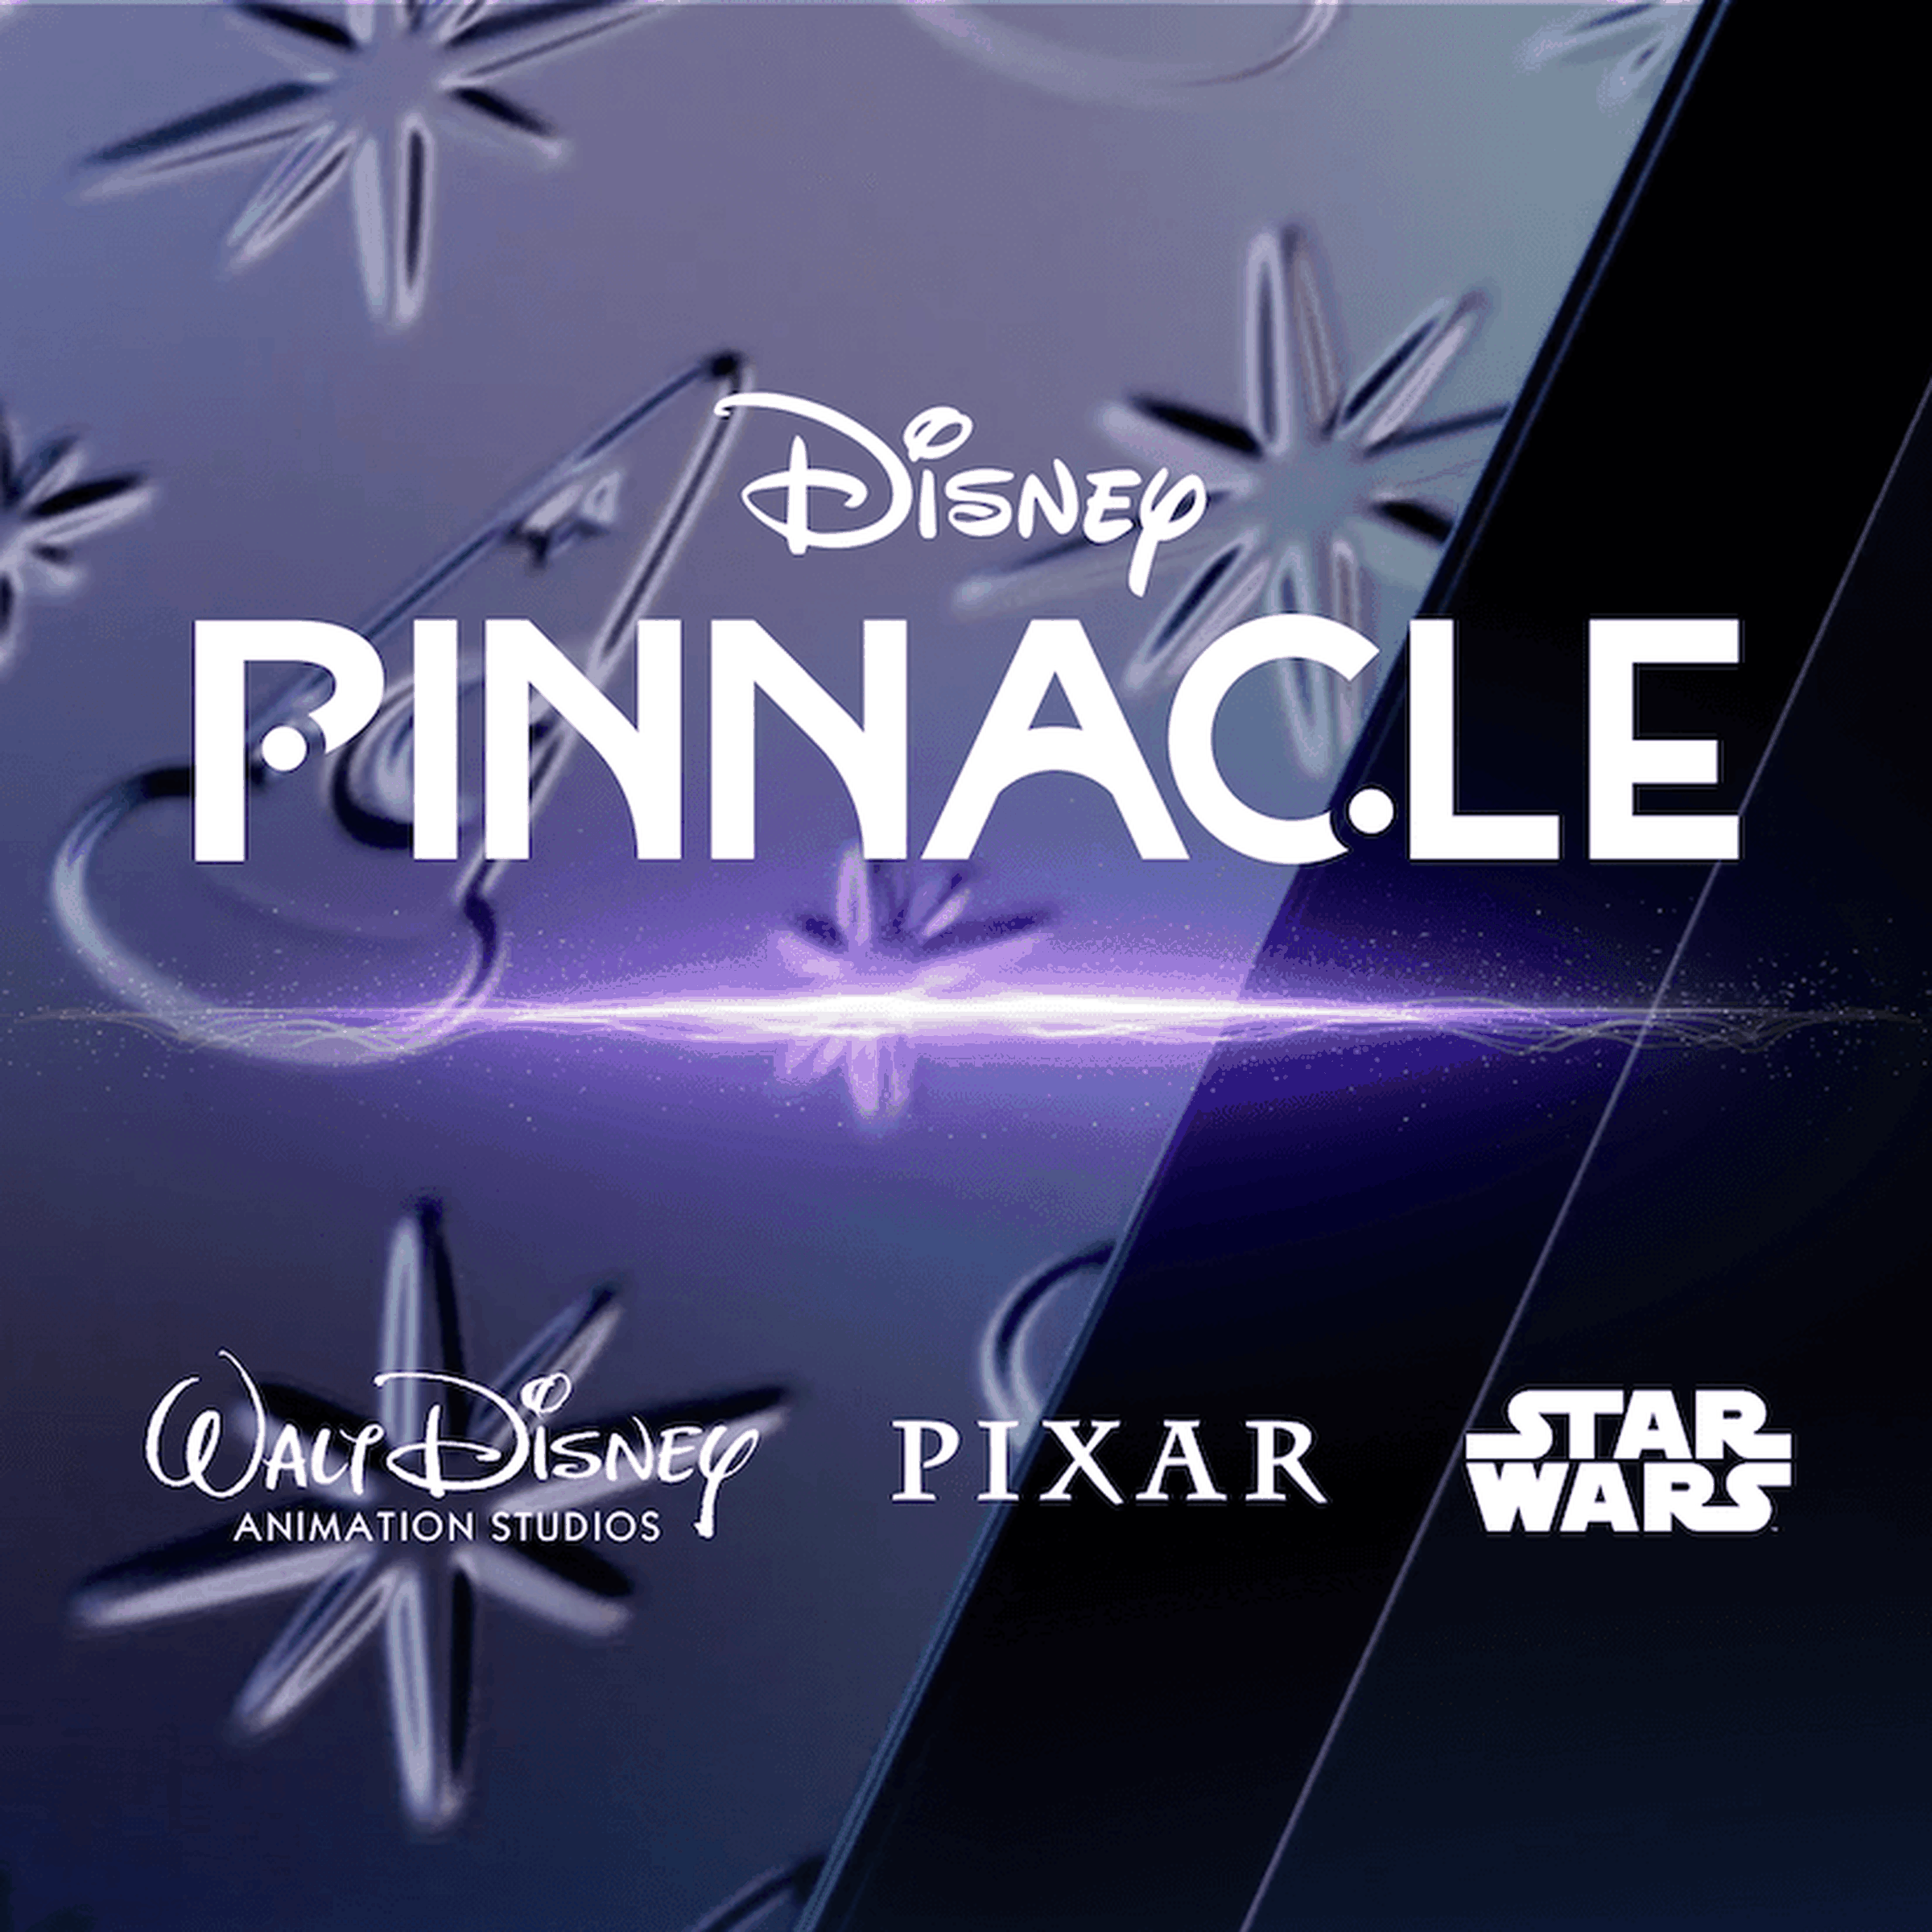 The words “Disney Pinnacle” displayed above logos for Walt Disney Animation Studios, Pixar, and Star Wars.